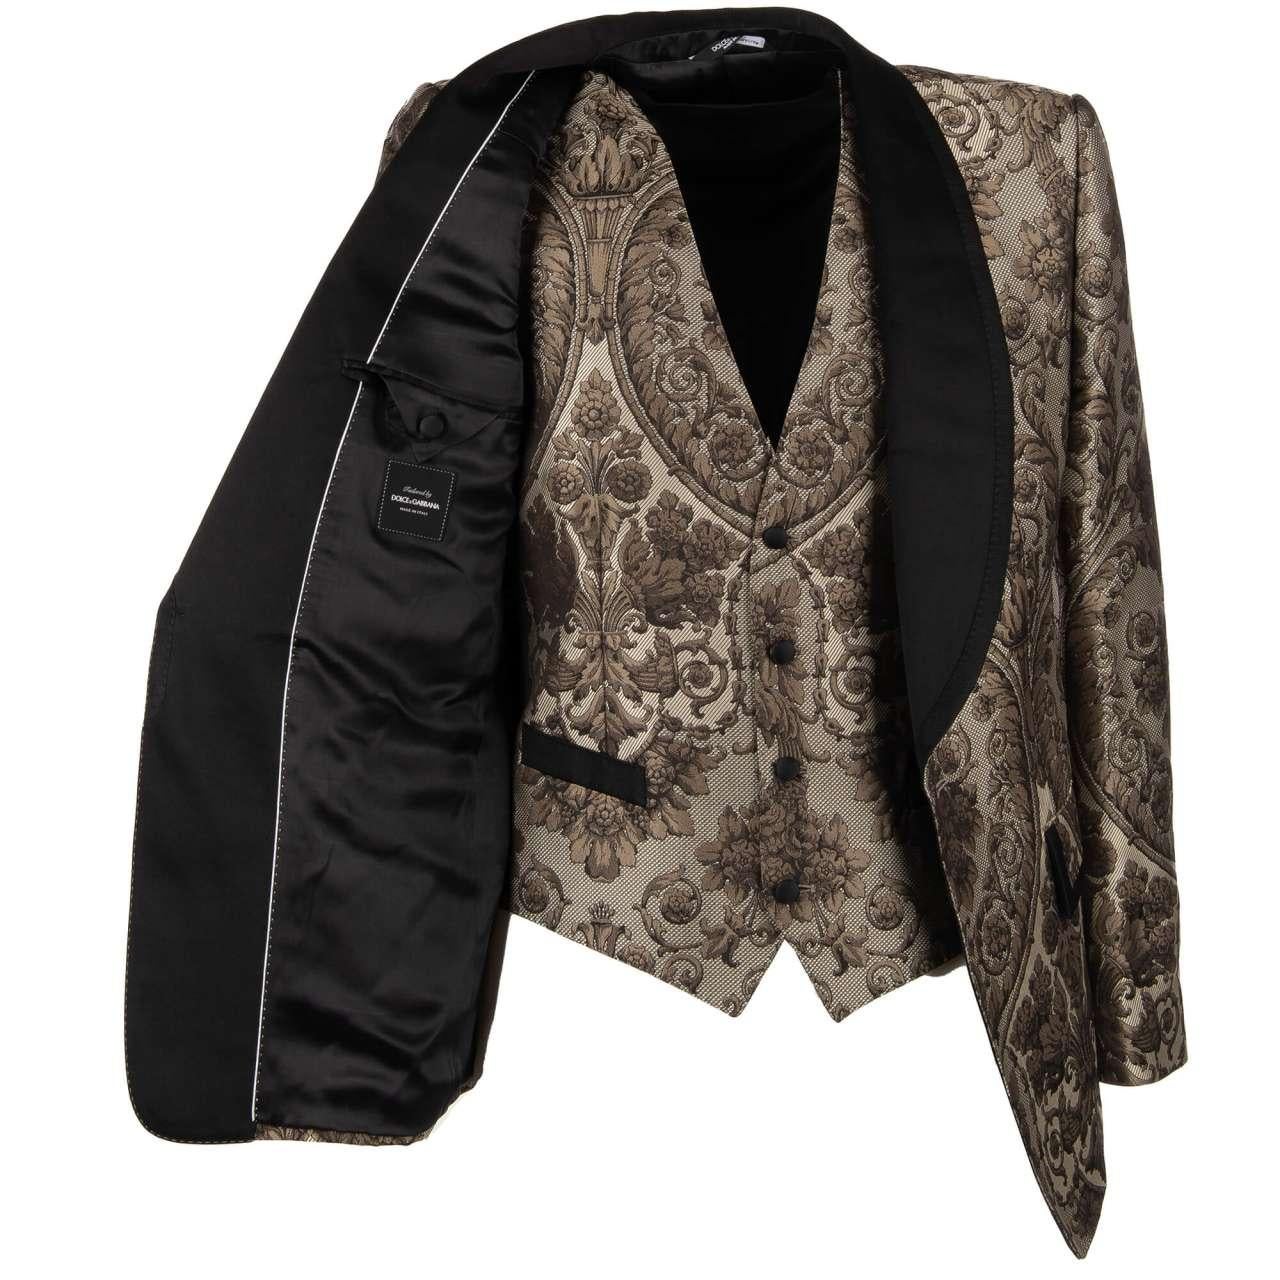 Dolce & Gabbana Baroque Jacquard Blazer with Waistcoat Black Beige 50 US 40 M L For Sale 1